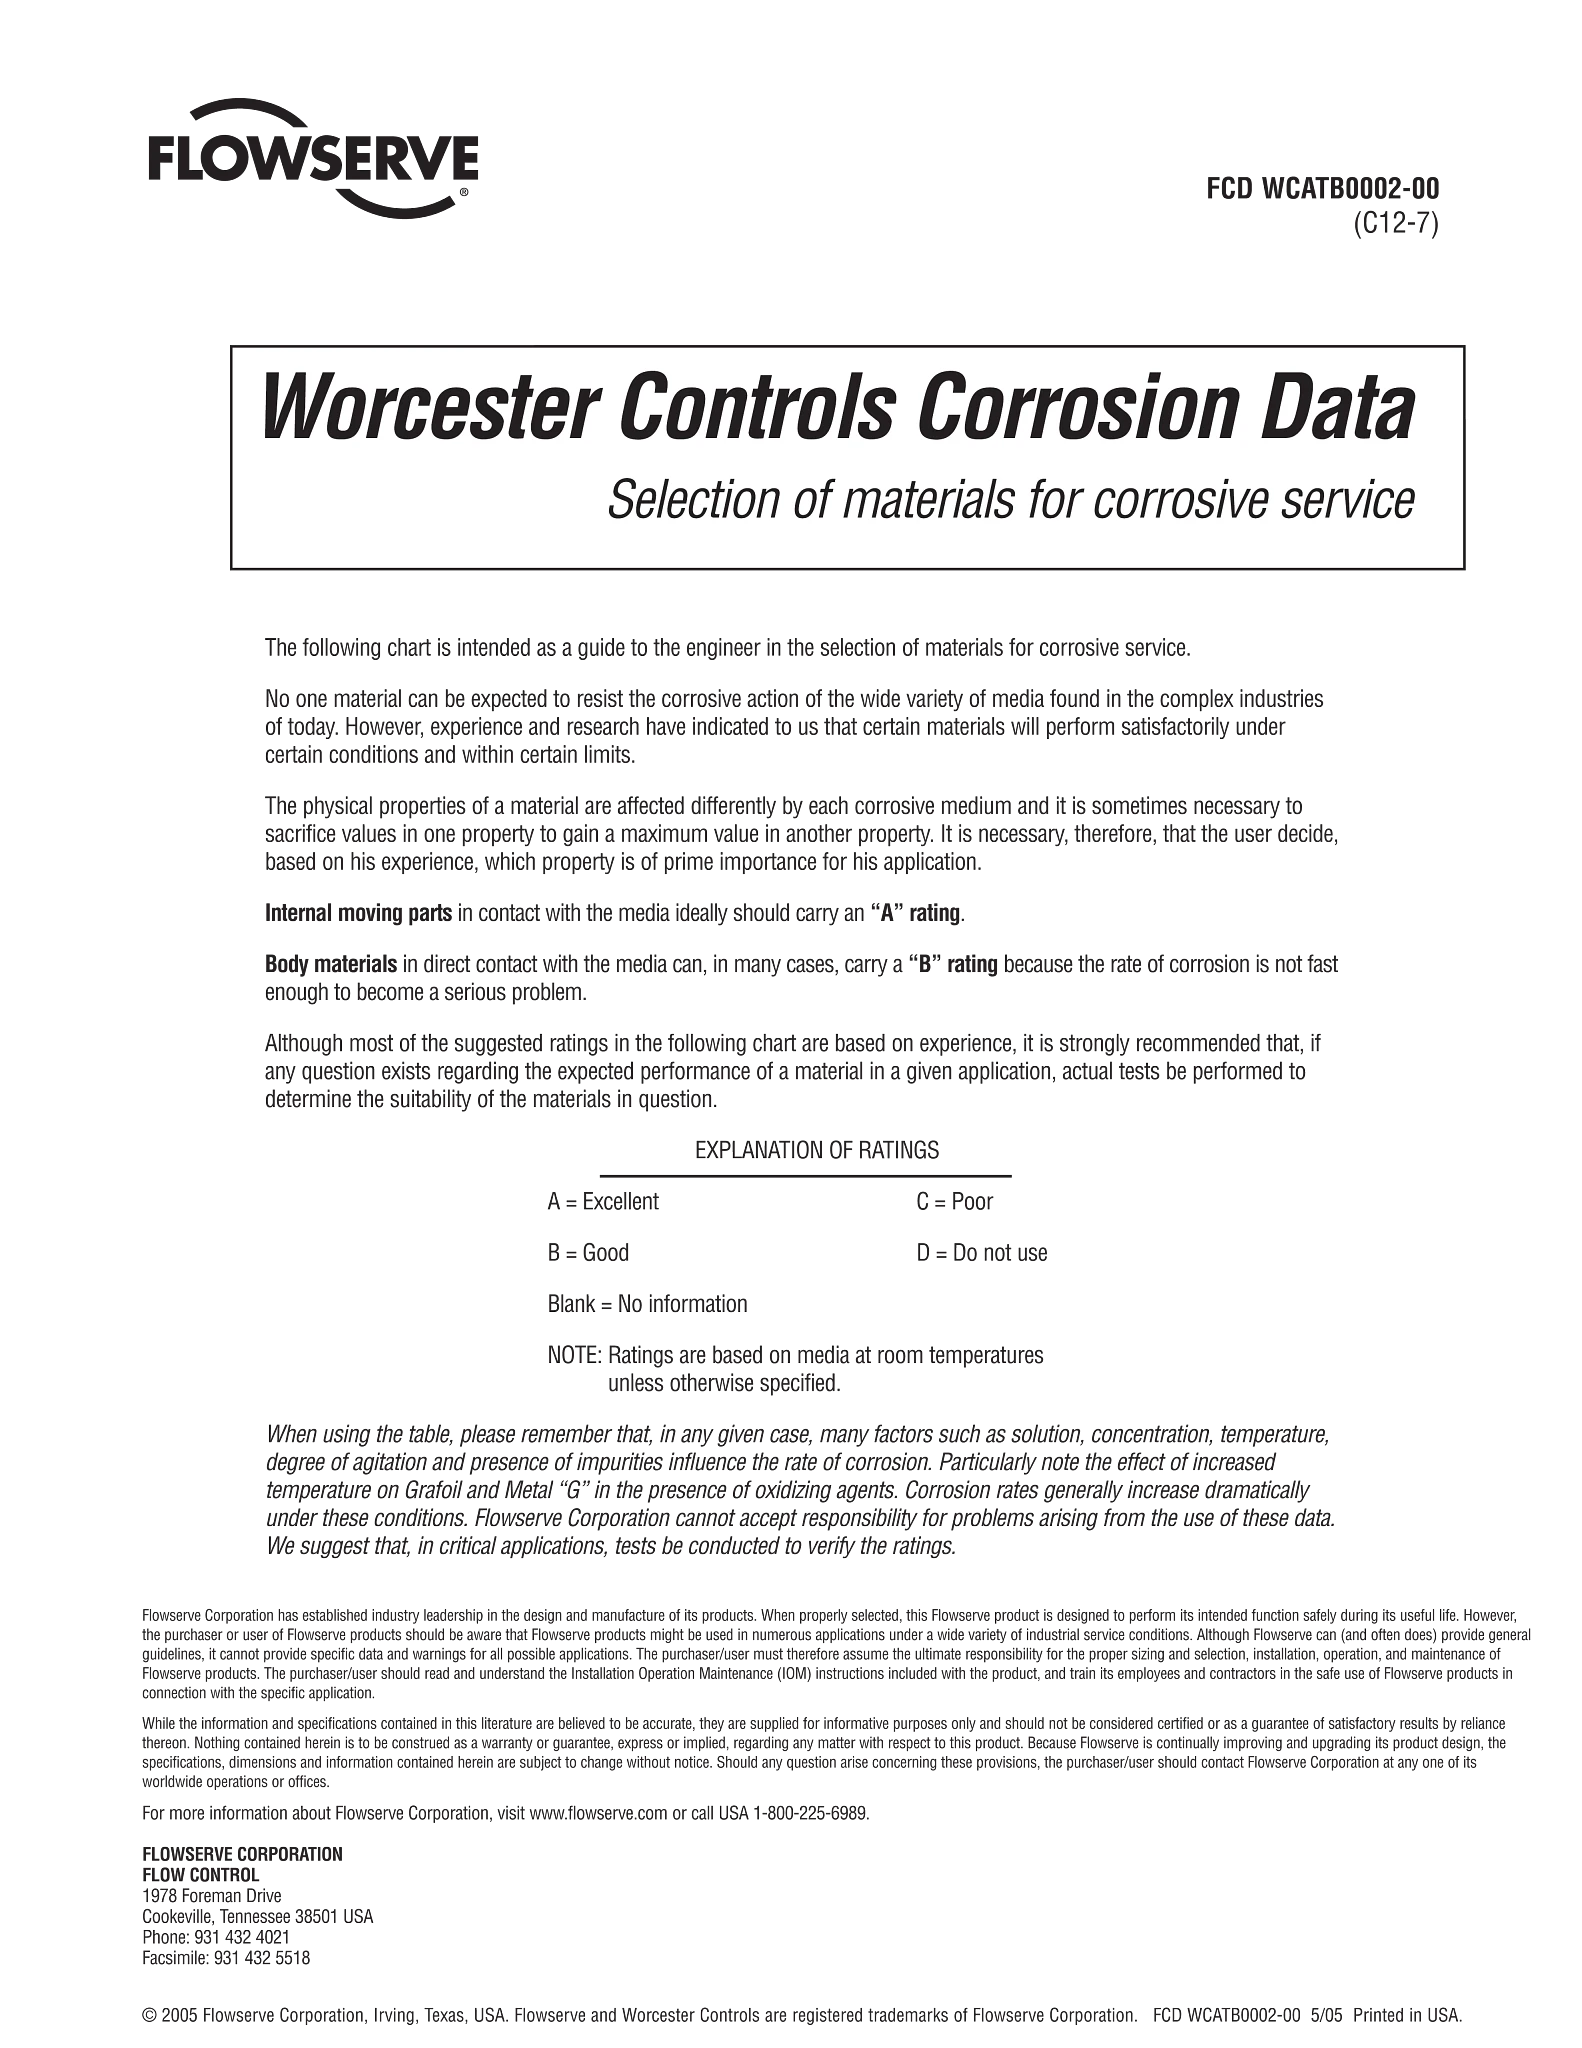 Worcester Controls腐蚀数据材料选择表（美洲）